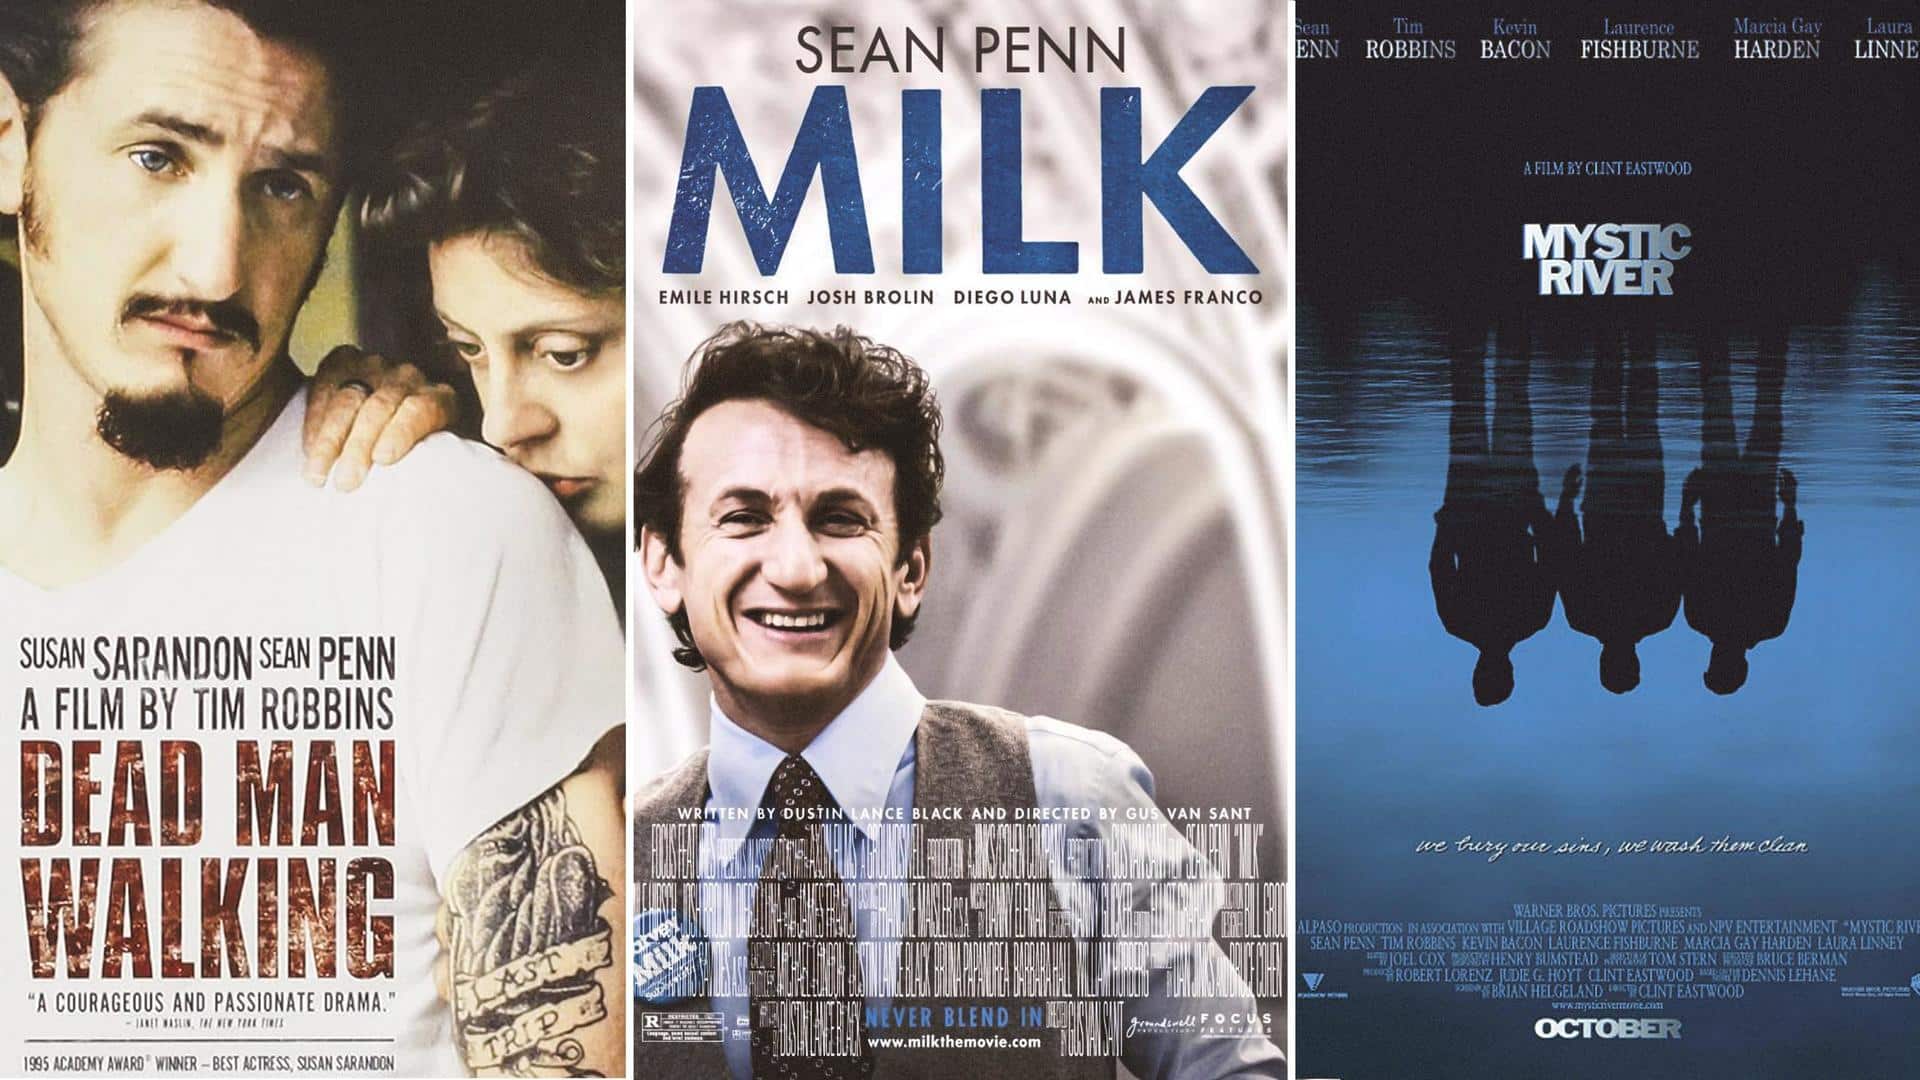 Sean Penn's top performances you shouldn't miss 